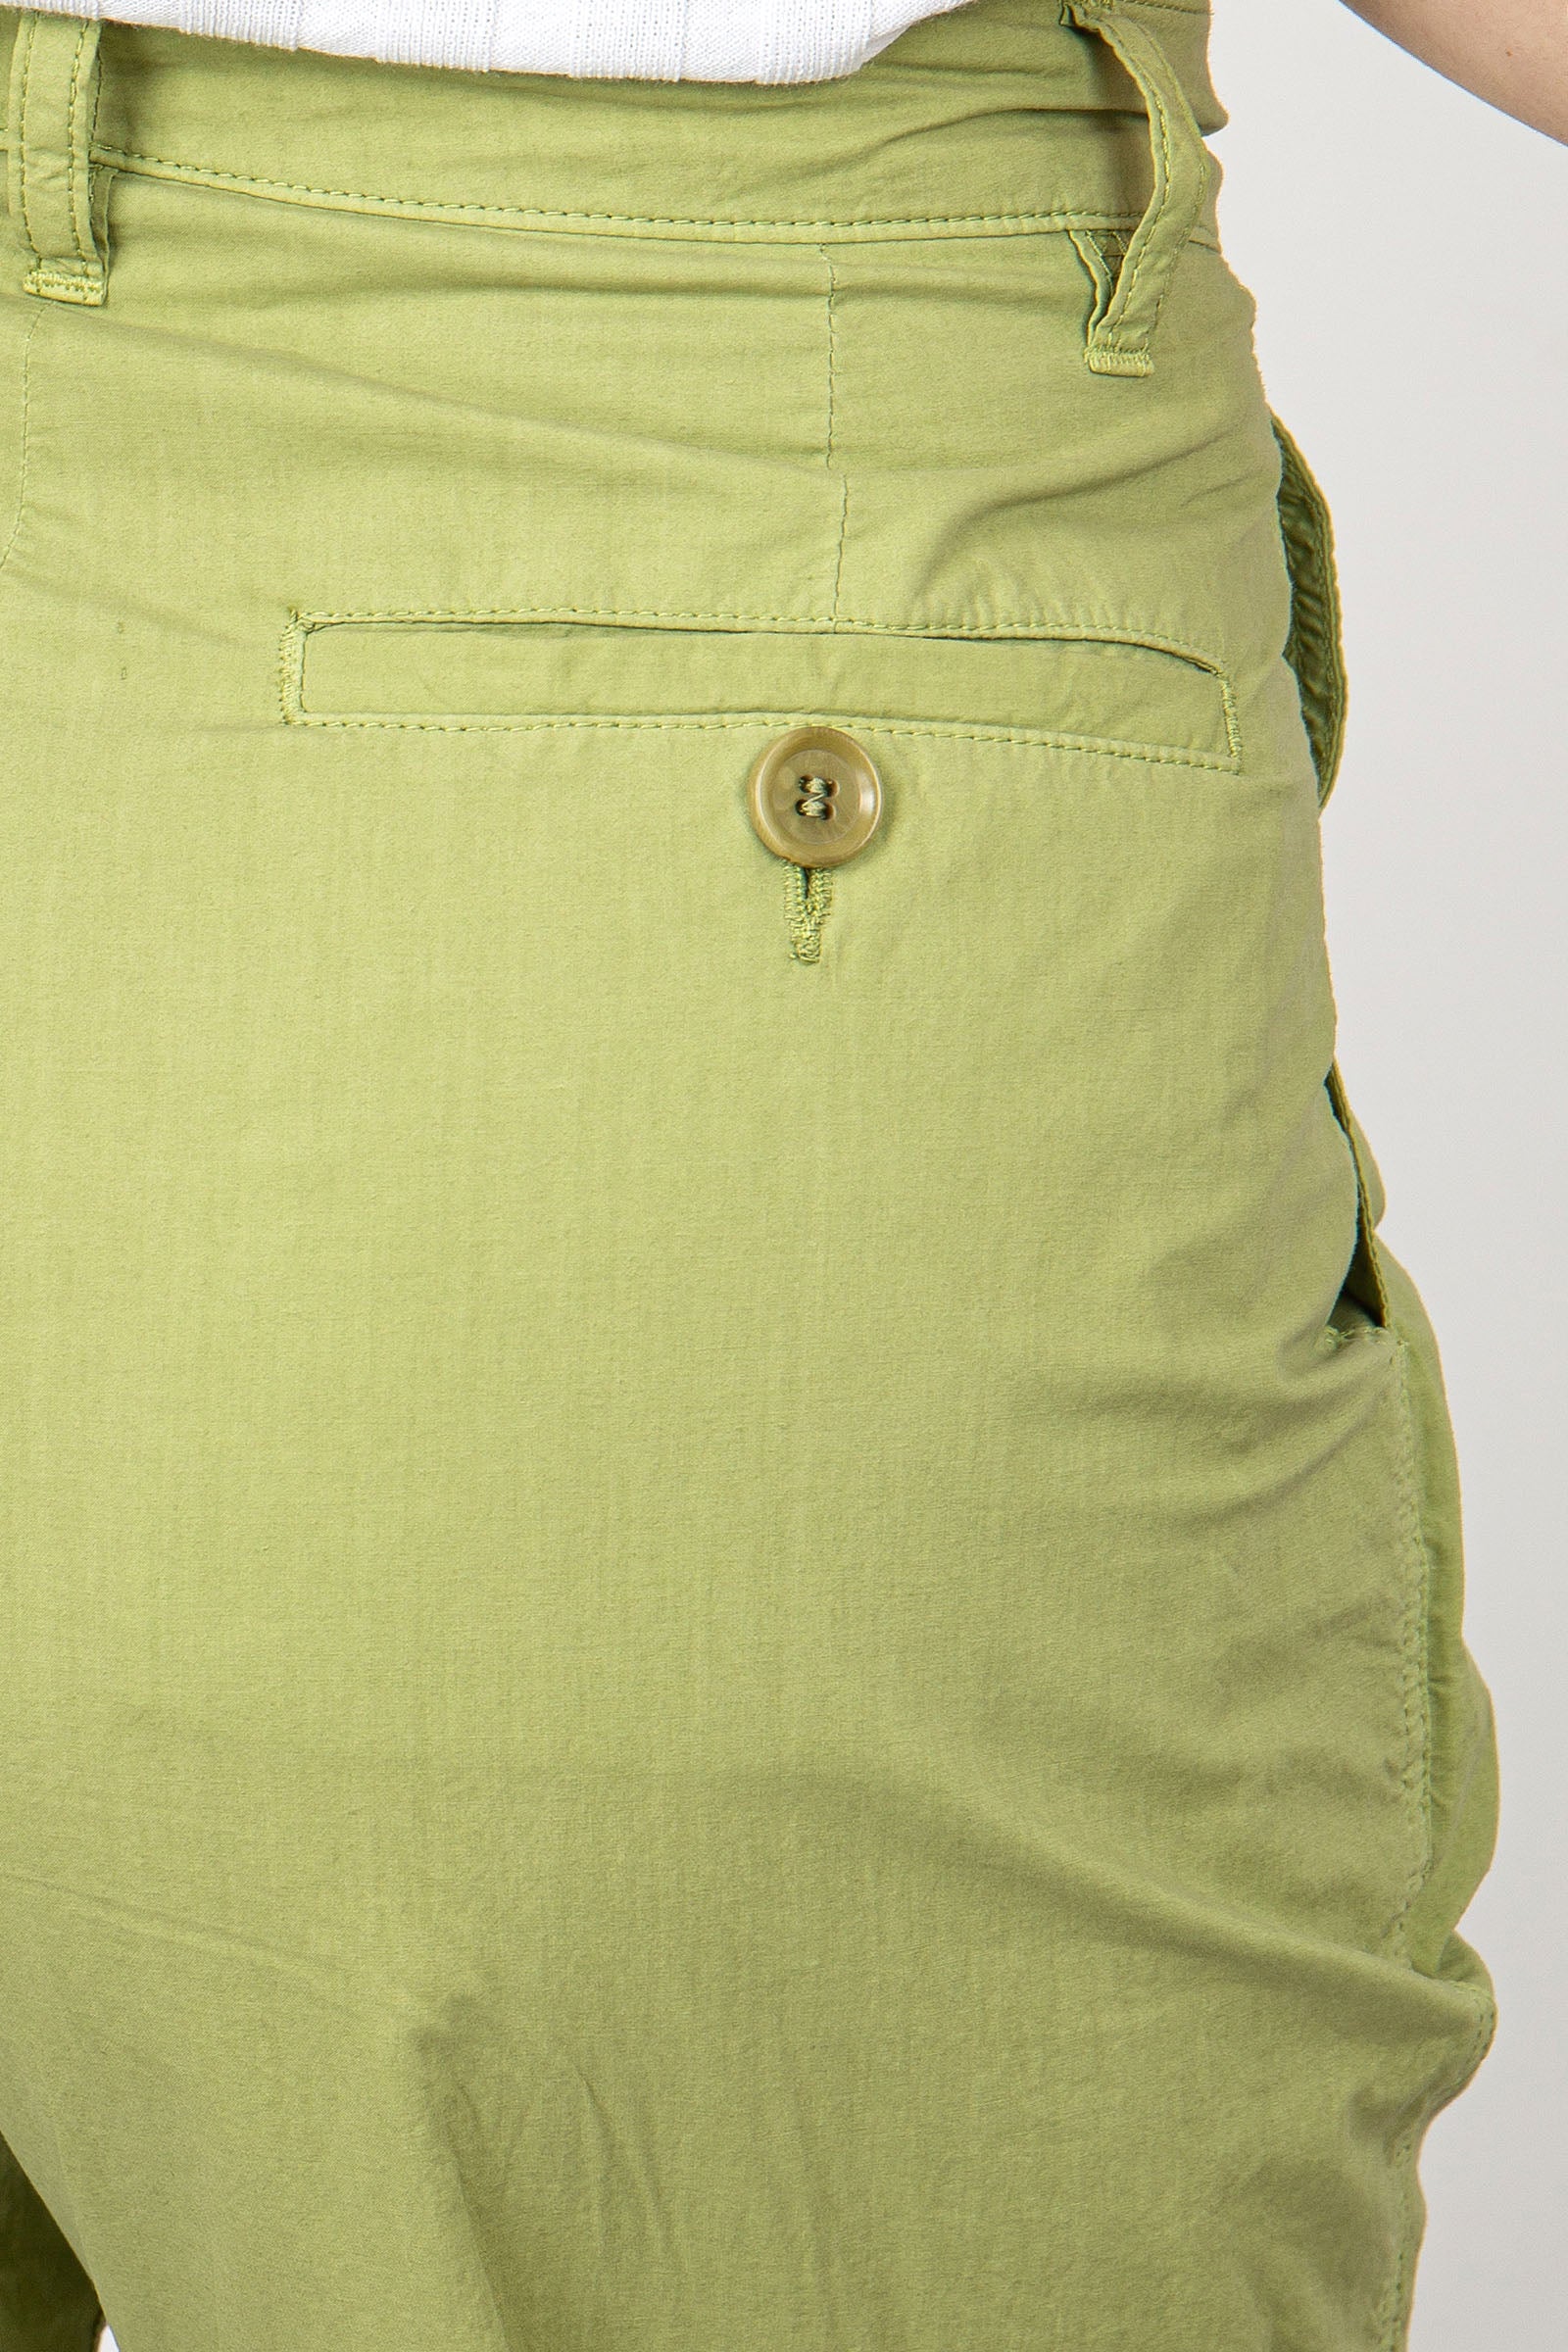 Aspesi Green Cotton Chino Pants - 5